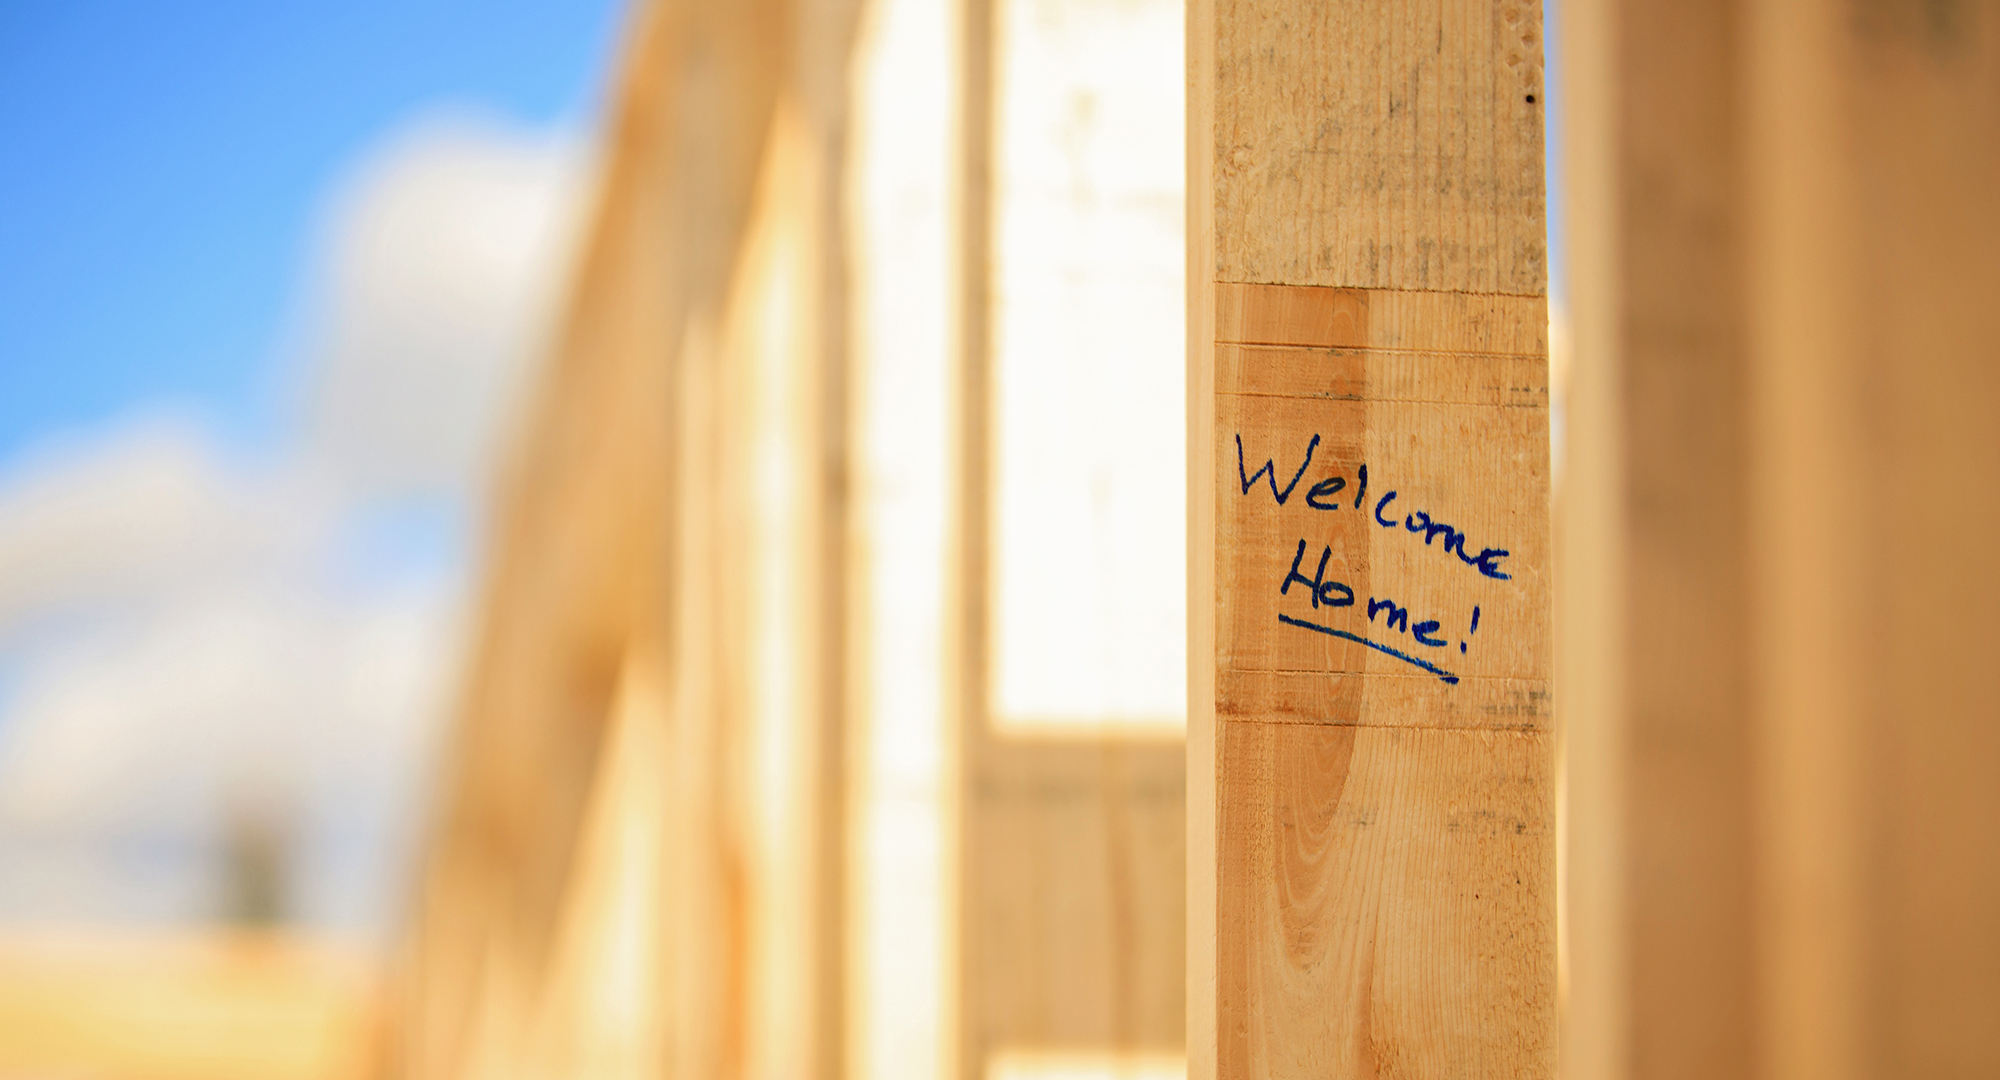 "Welcome Home" written on wood board